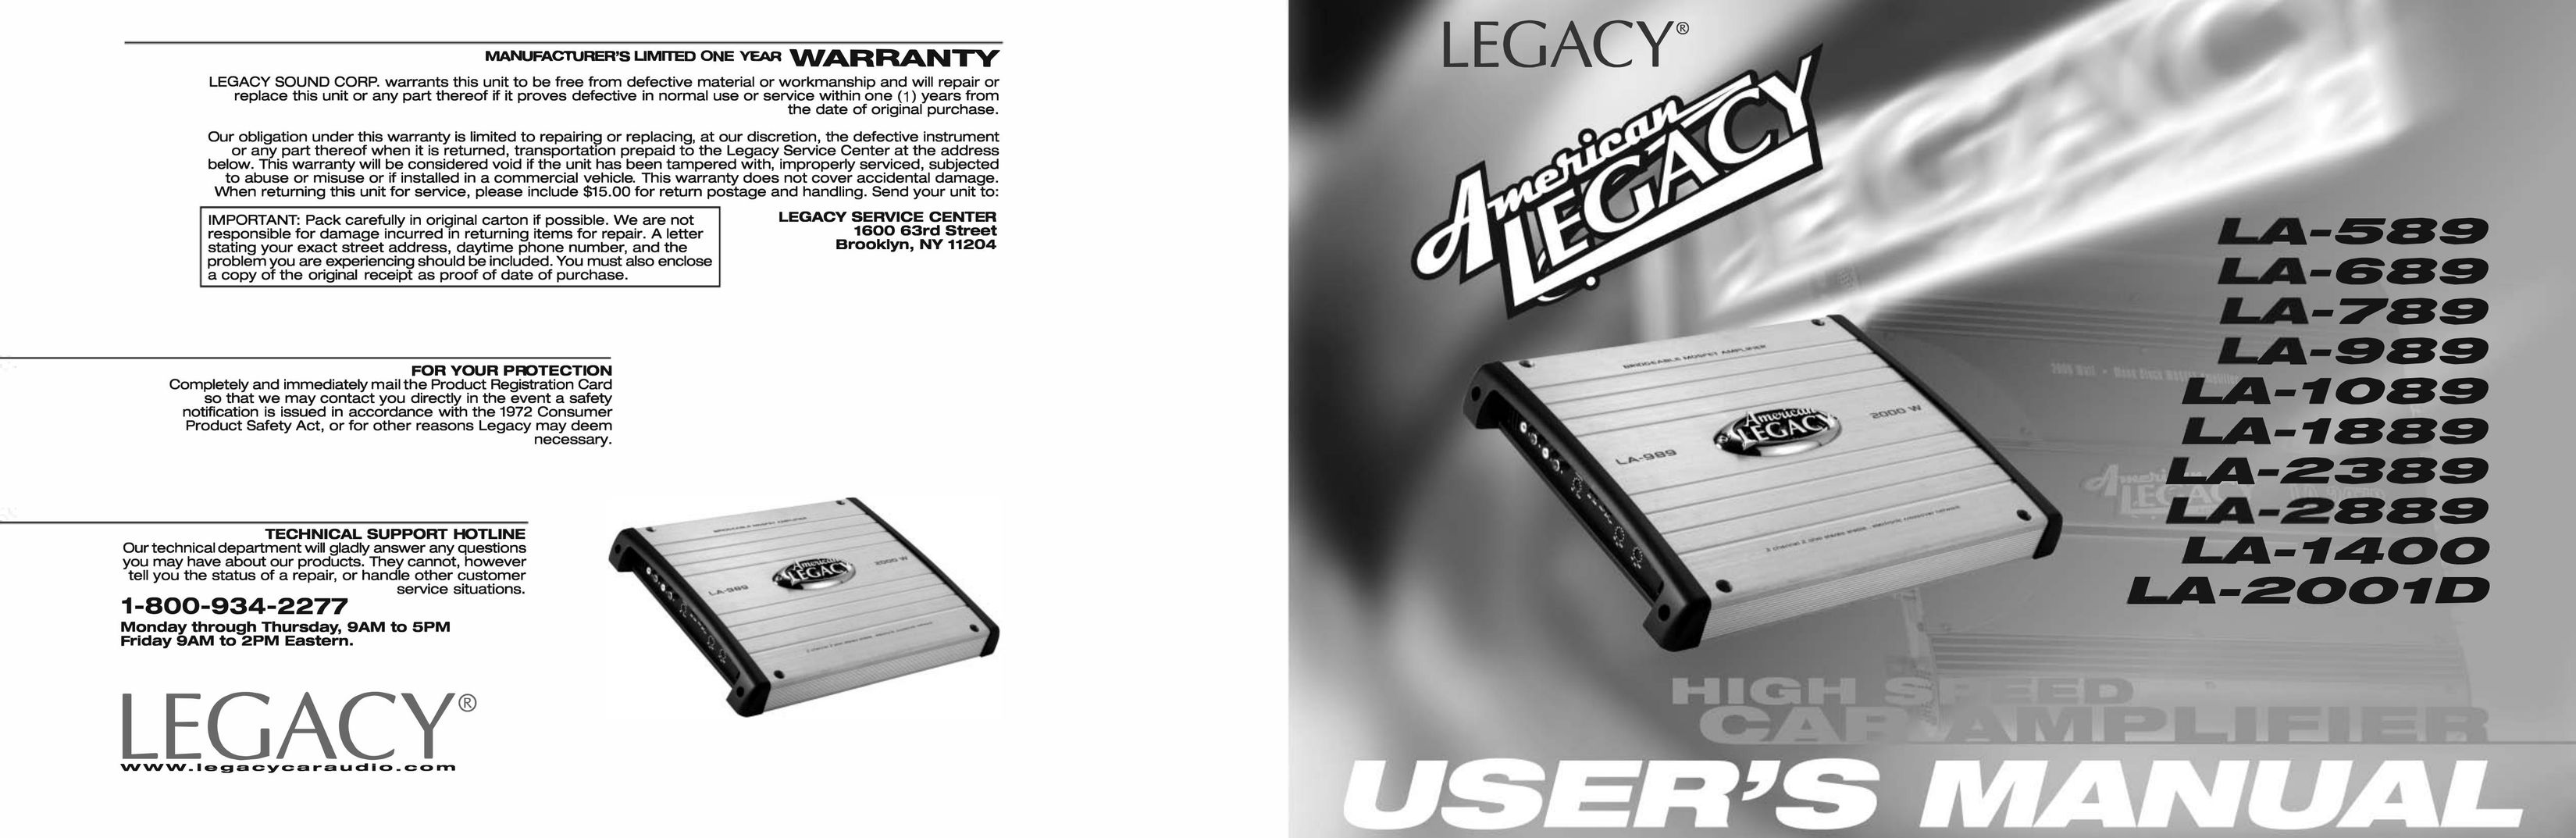 Legacy Car Audio LA-2889 Car Amplifier User Manual